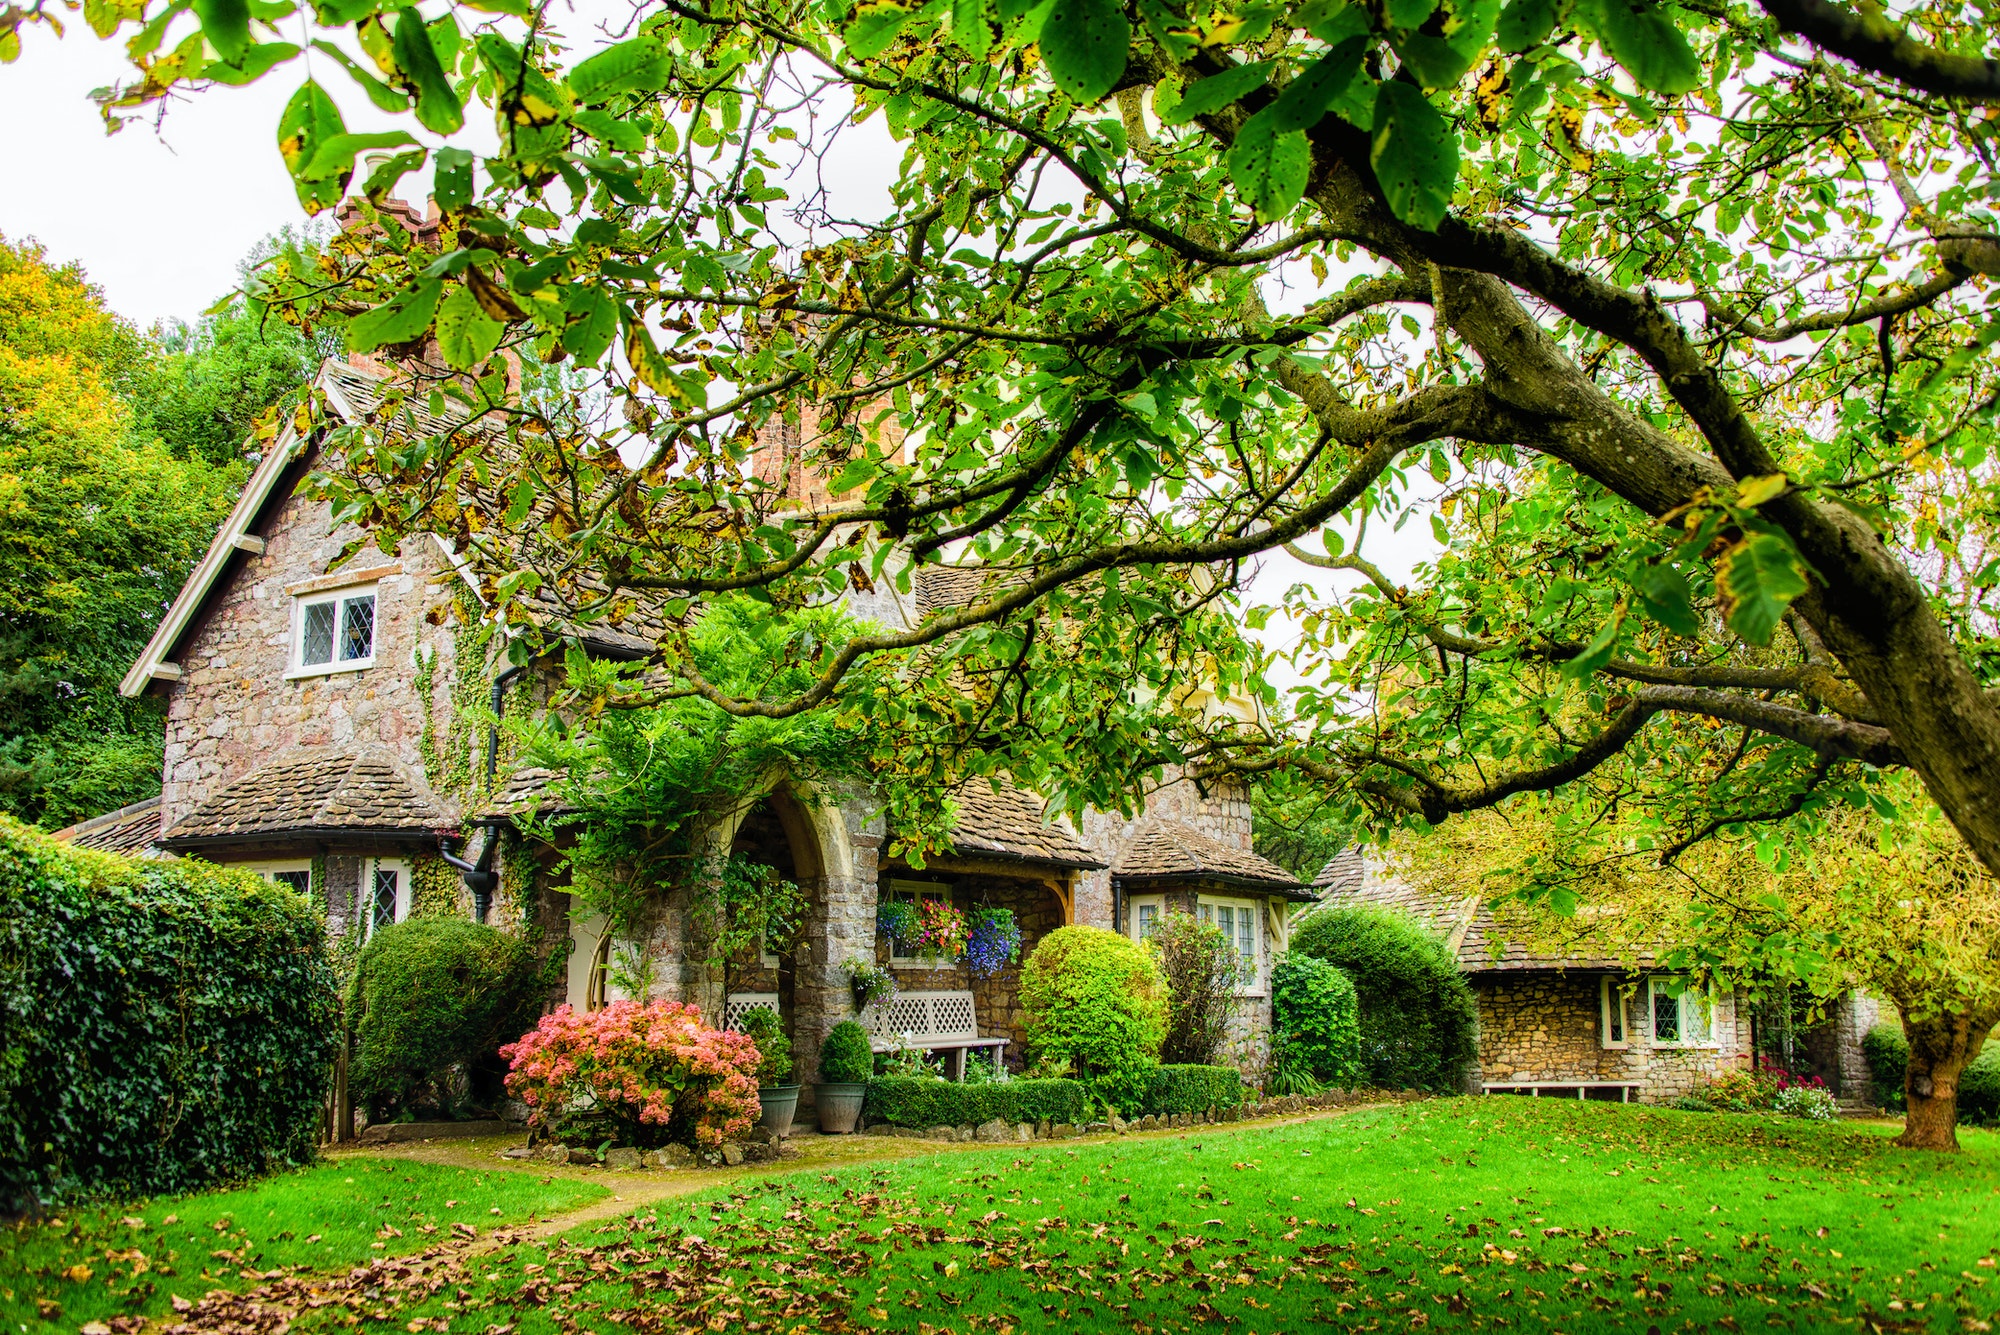 A quaint English cottage in Autumn